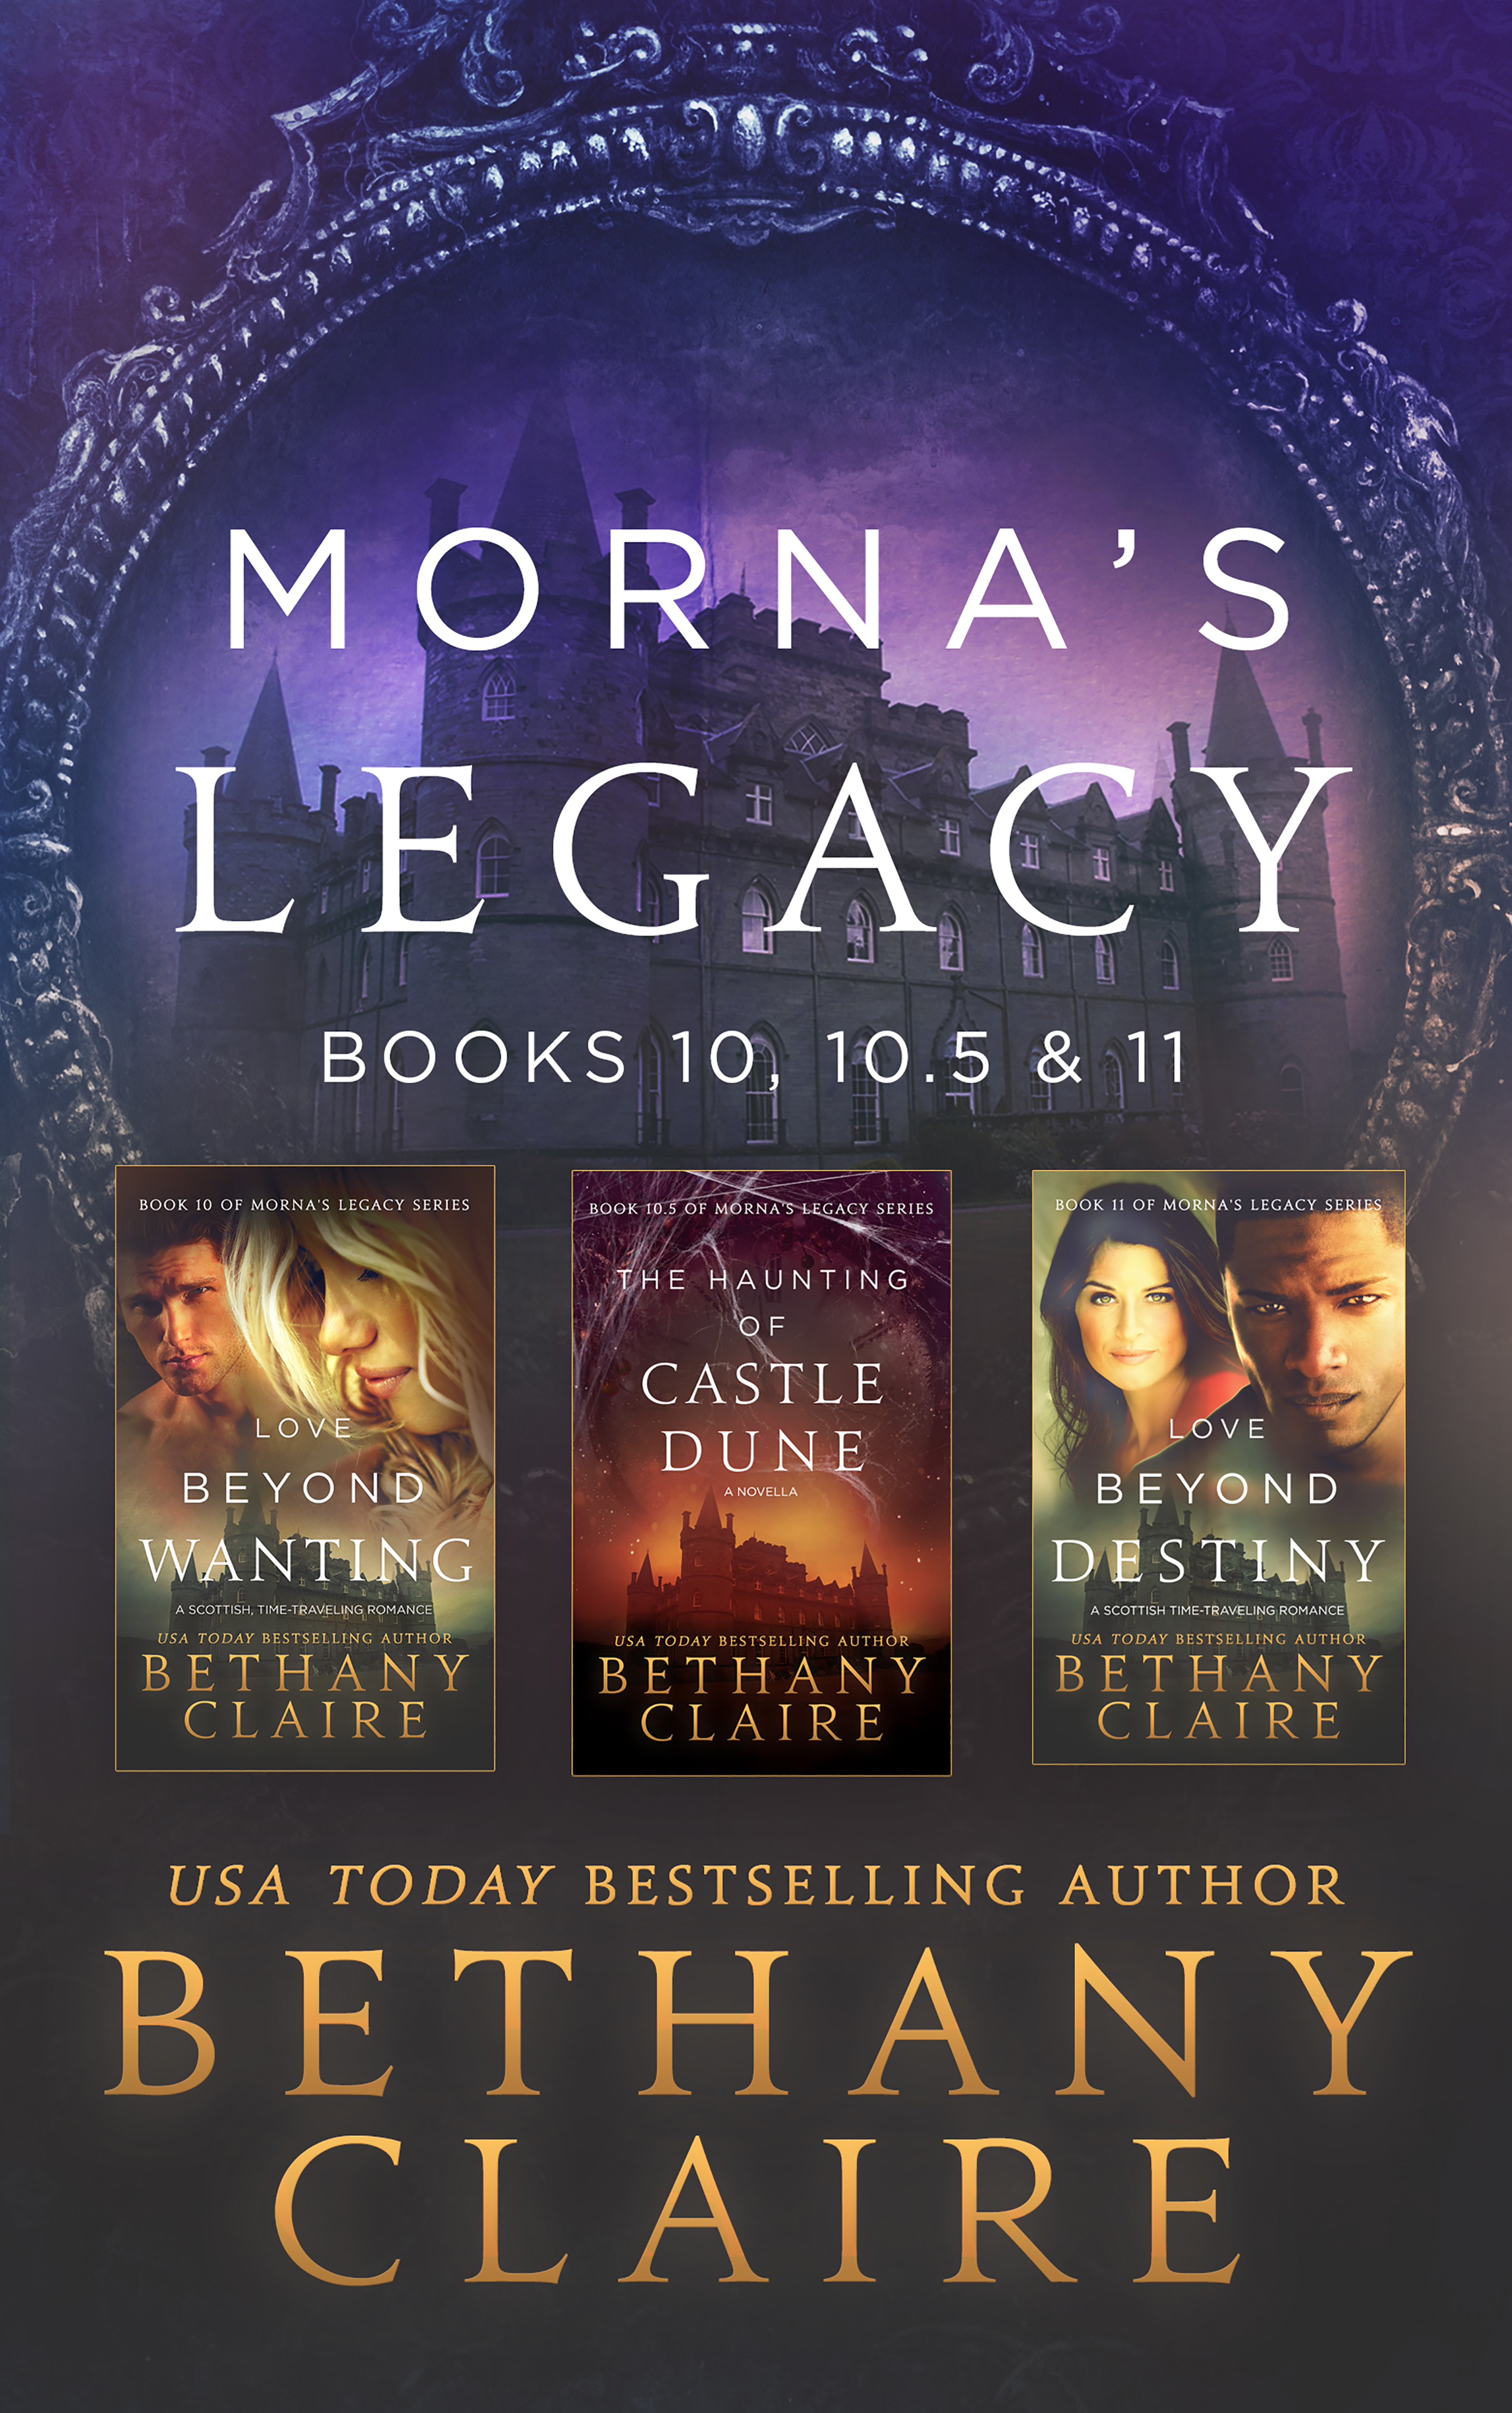 Morna's Legacy: Books 10, 10.5 & 11